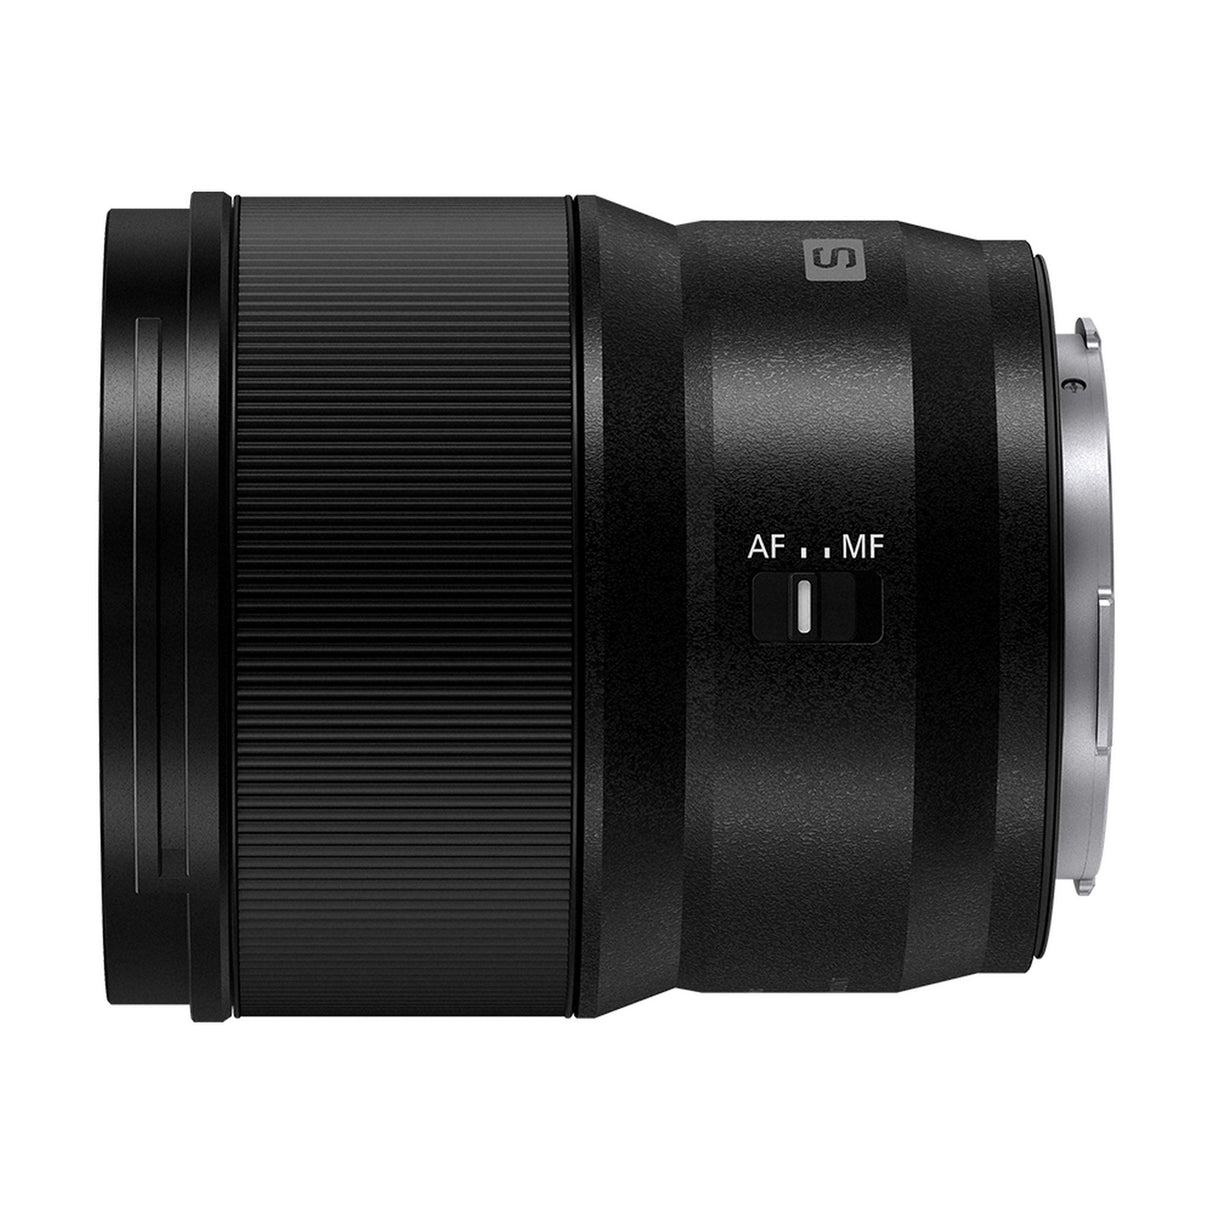 Panasonic LUMIX S-S50 S 50mm F1.8 L Mount Lens